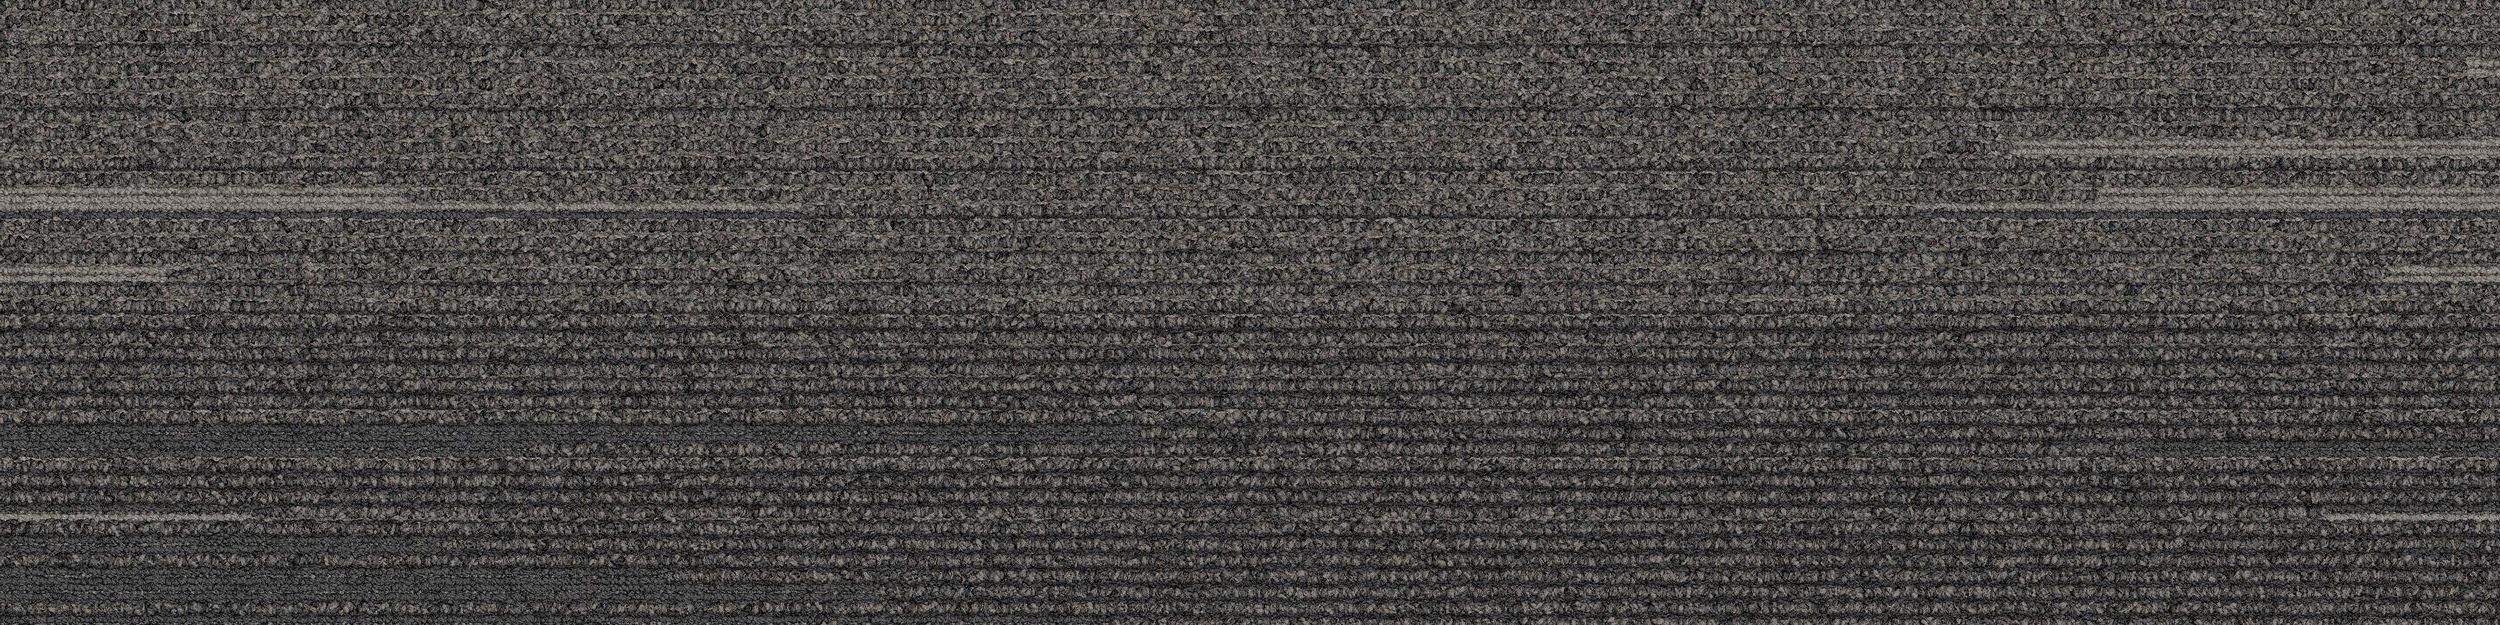 SL930 Carpet Tile In Charcoal Fade image number 2